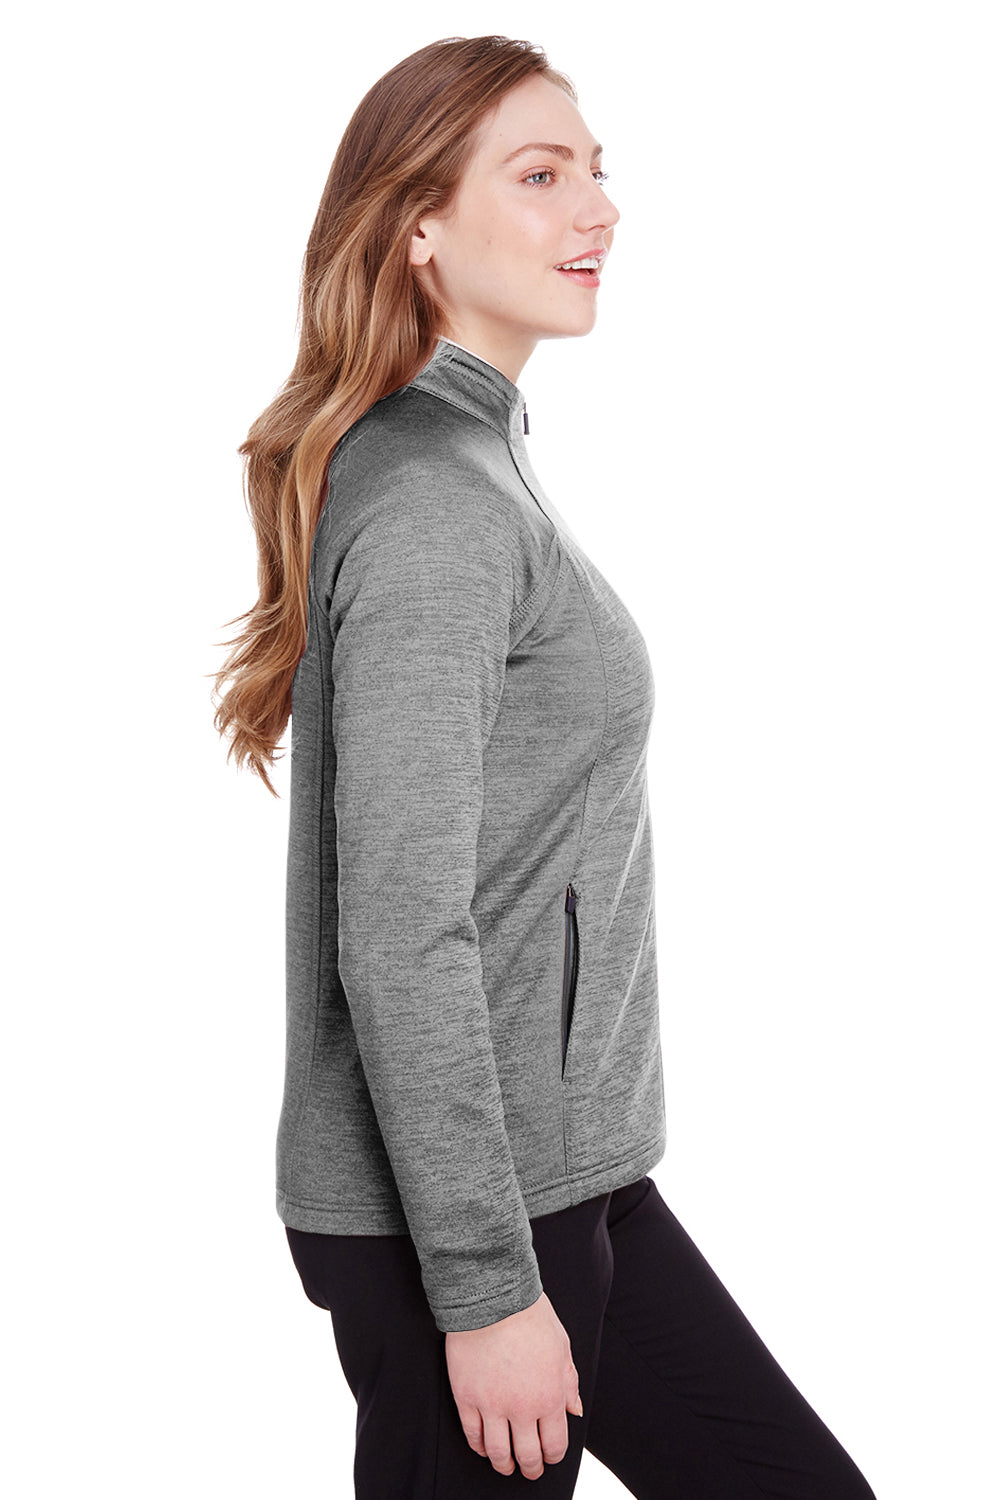 North End NE712W Womens Flux 2.0 Fleece Water Resistant Full Zip Jacket Light Grey/Carbon Grey Side